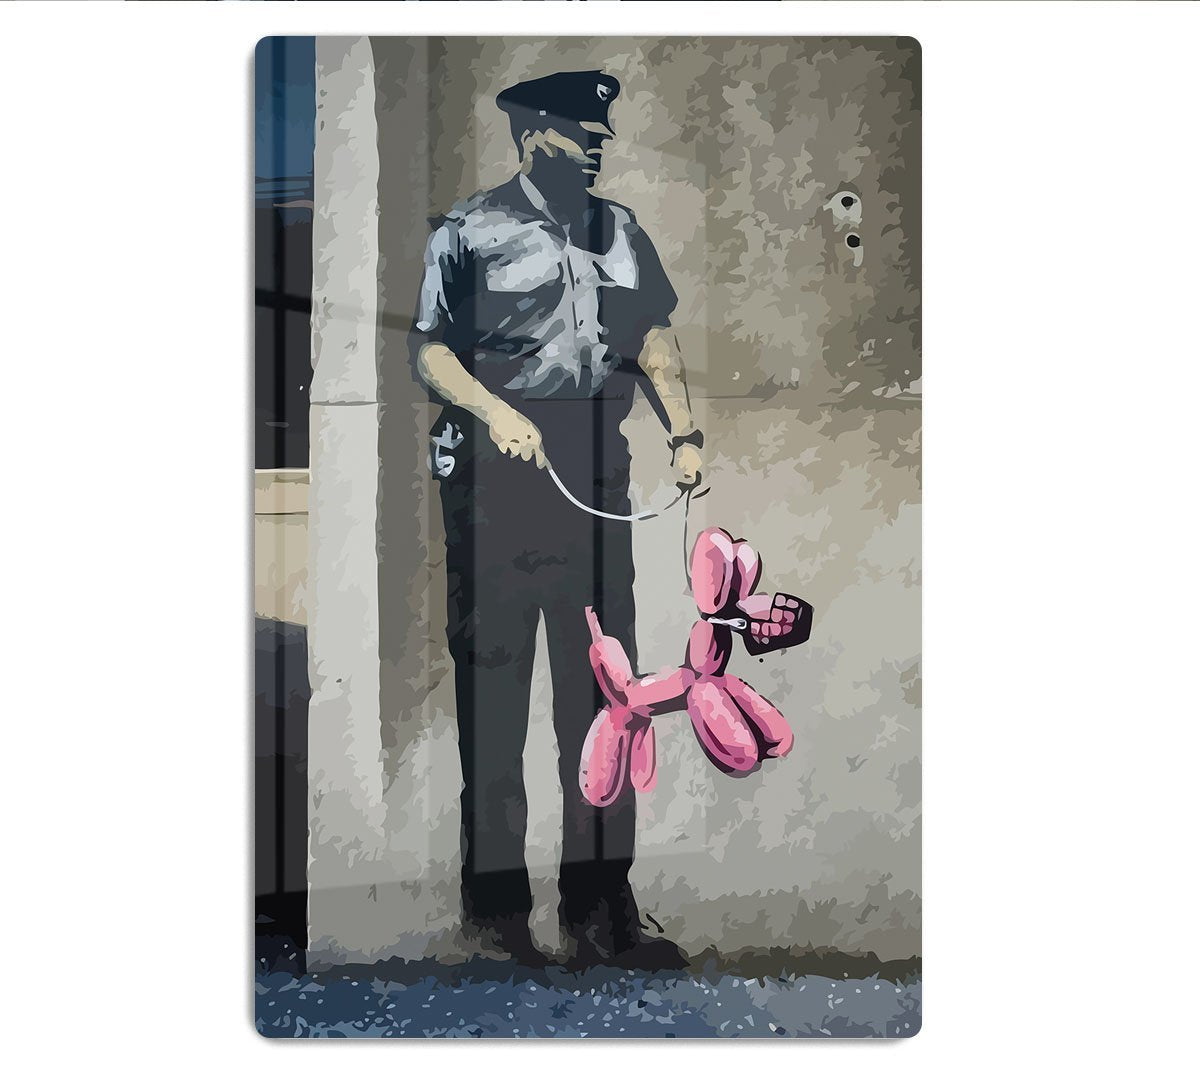 Banksy Security Guard With Pink Balloon Dog HD Metal Print